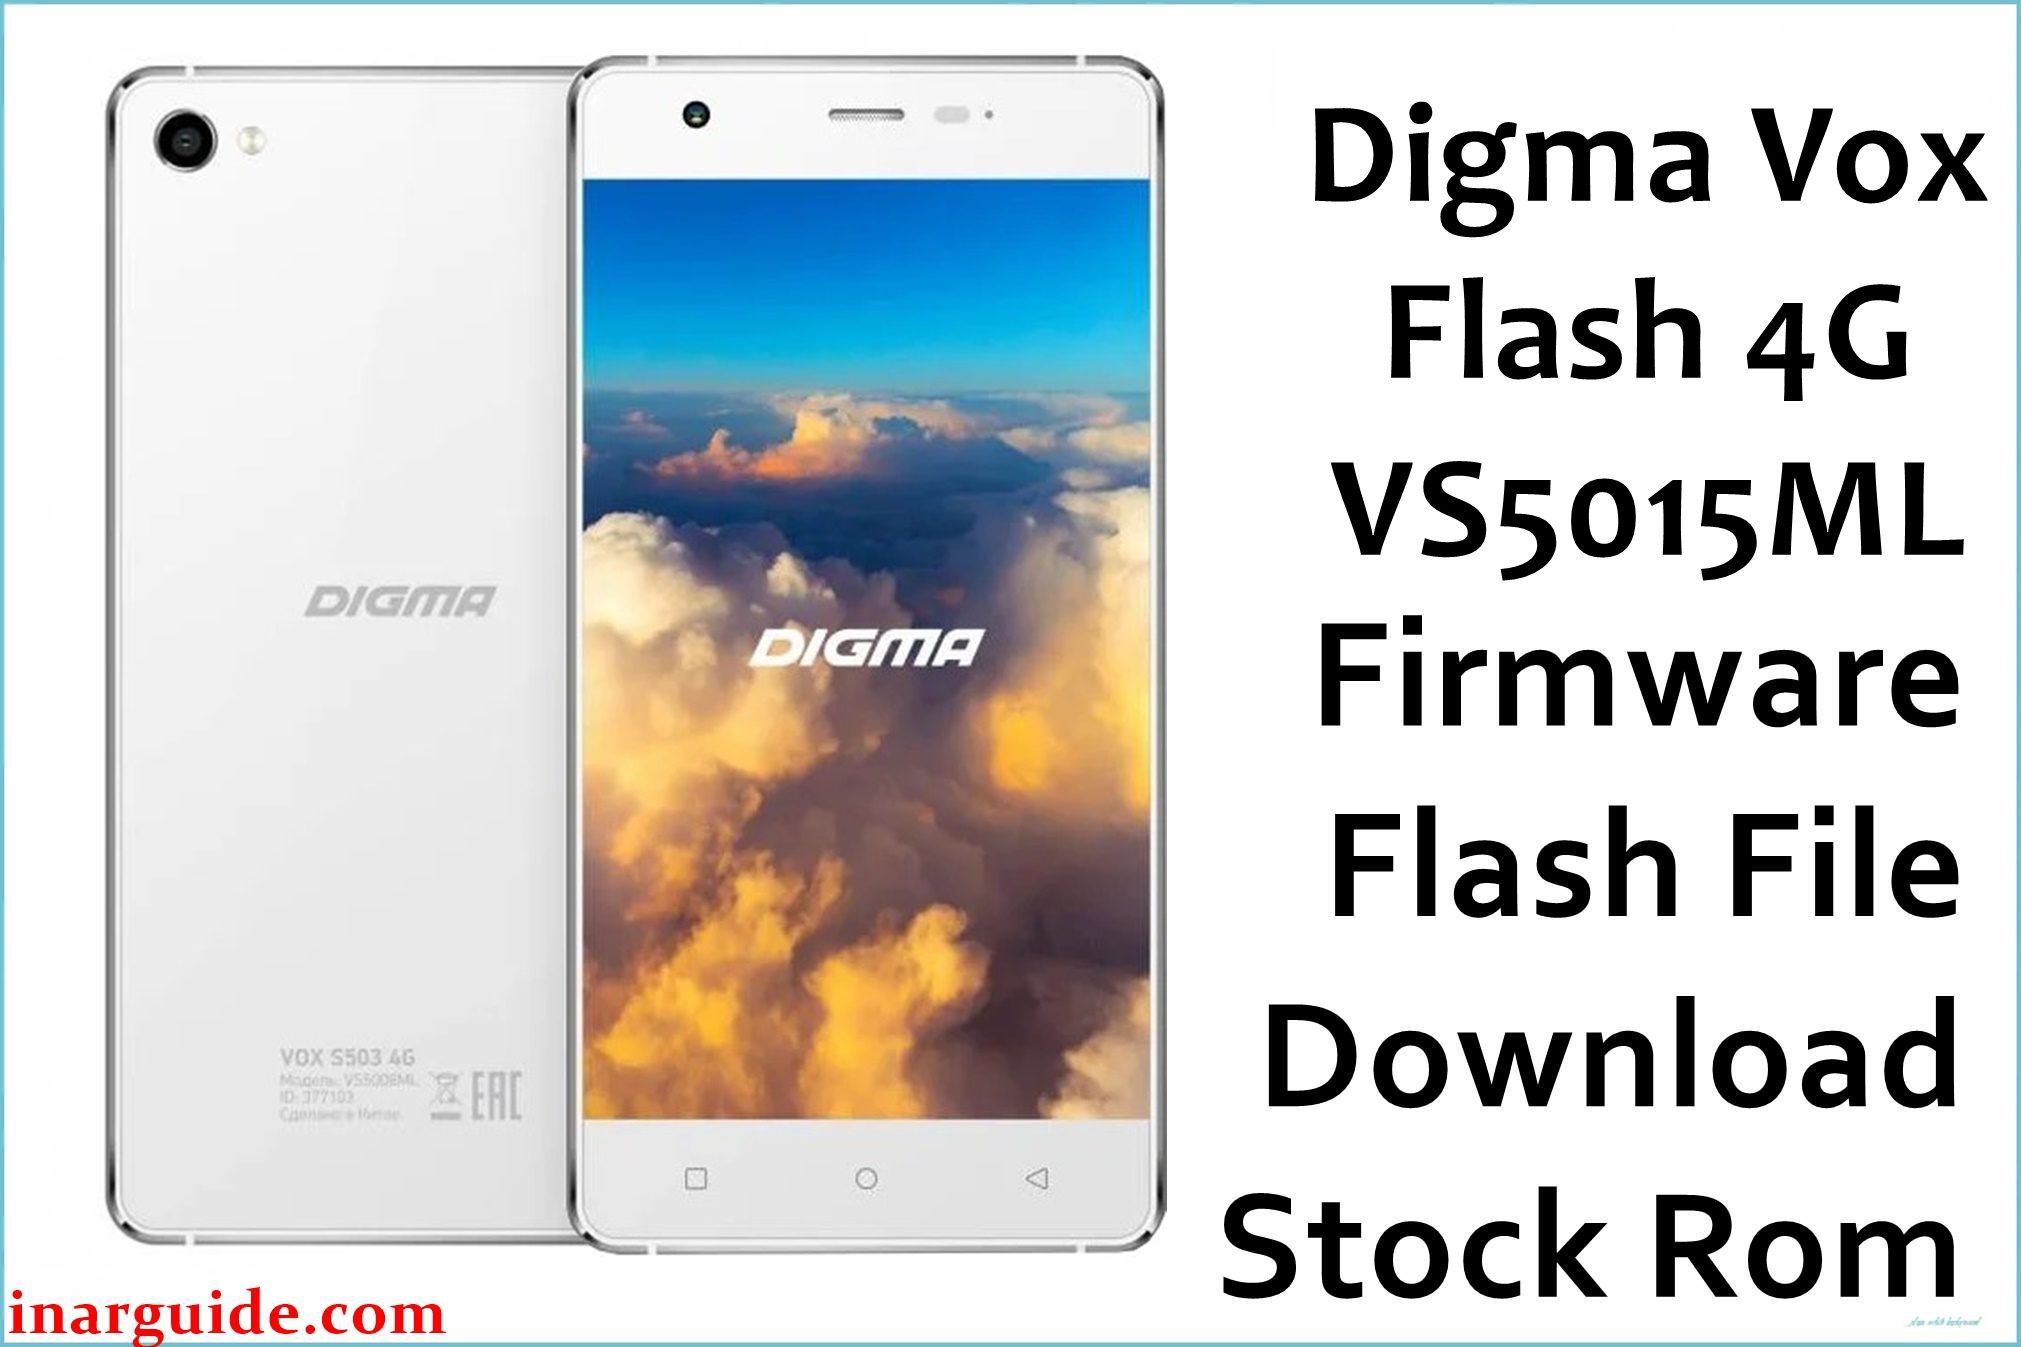 Digma Vox Flash 4G VS5015ML